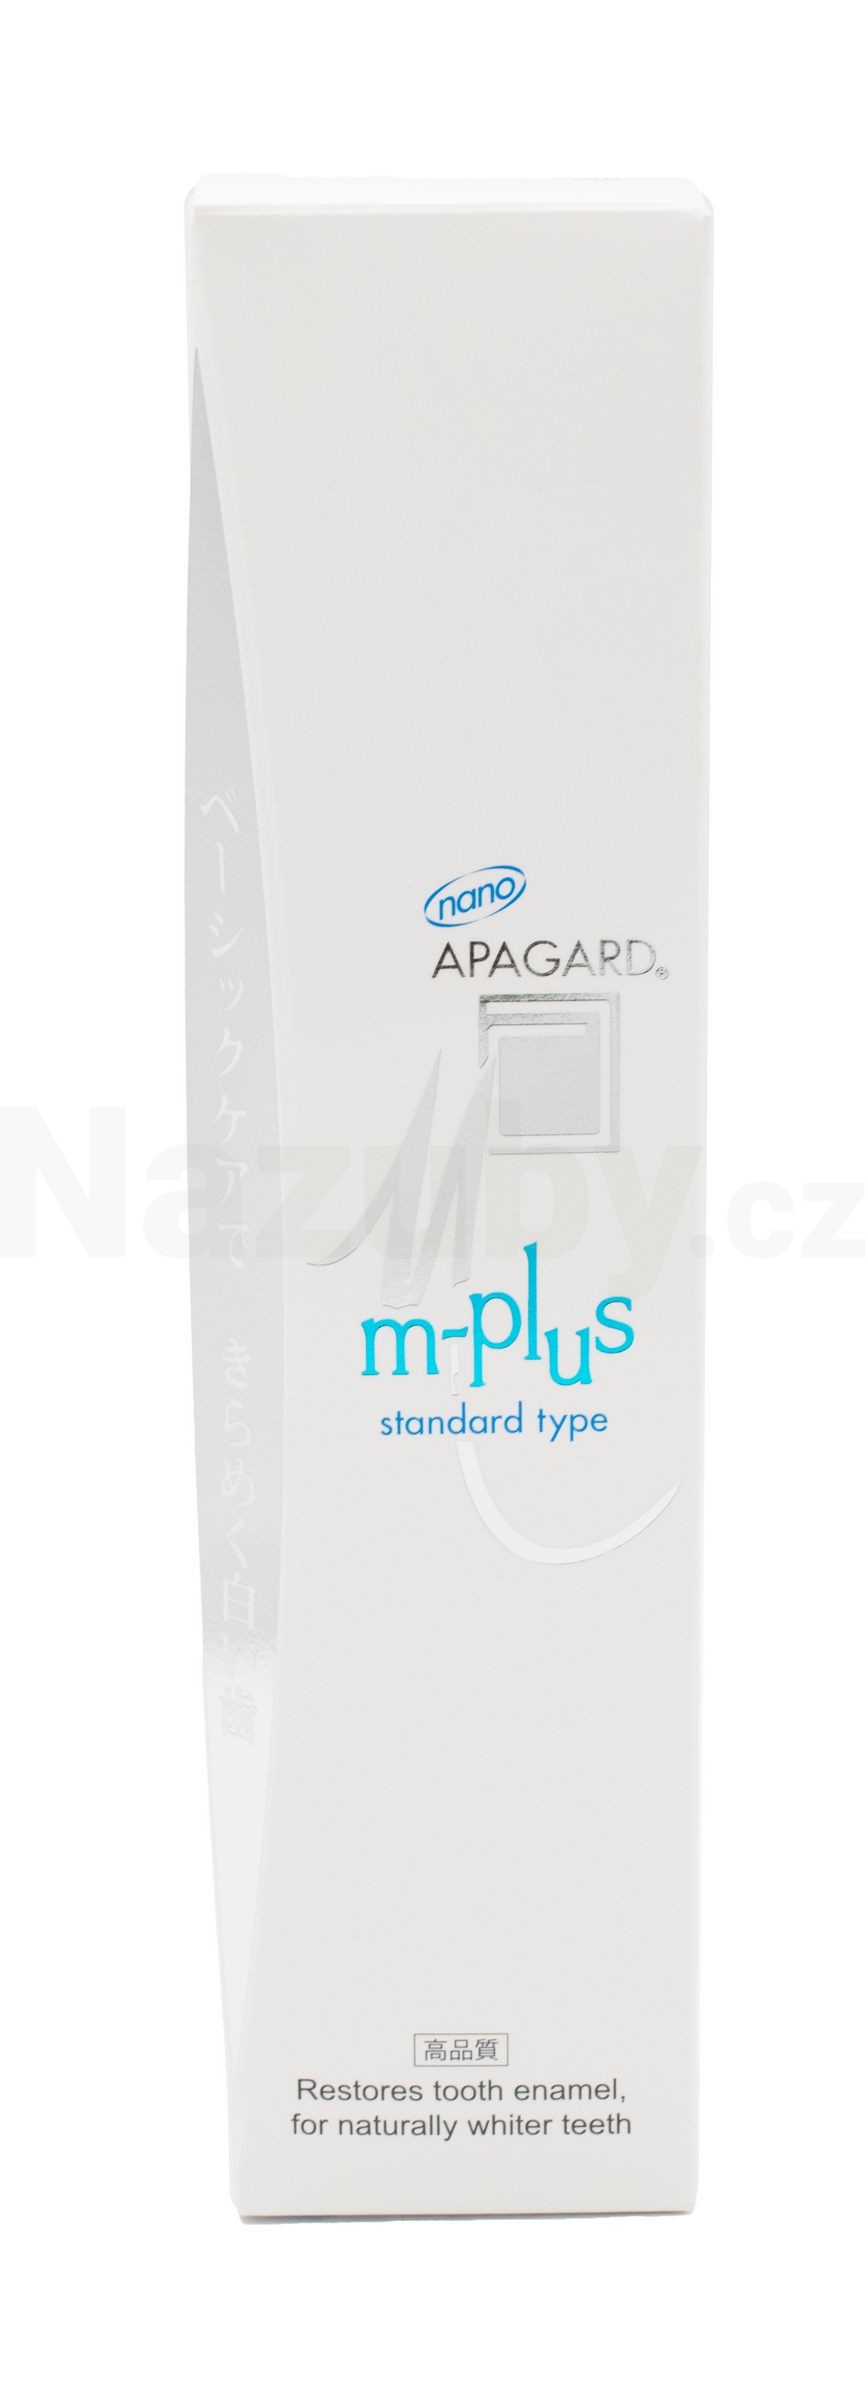 Apagard M-plus zubní pasta 125 g